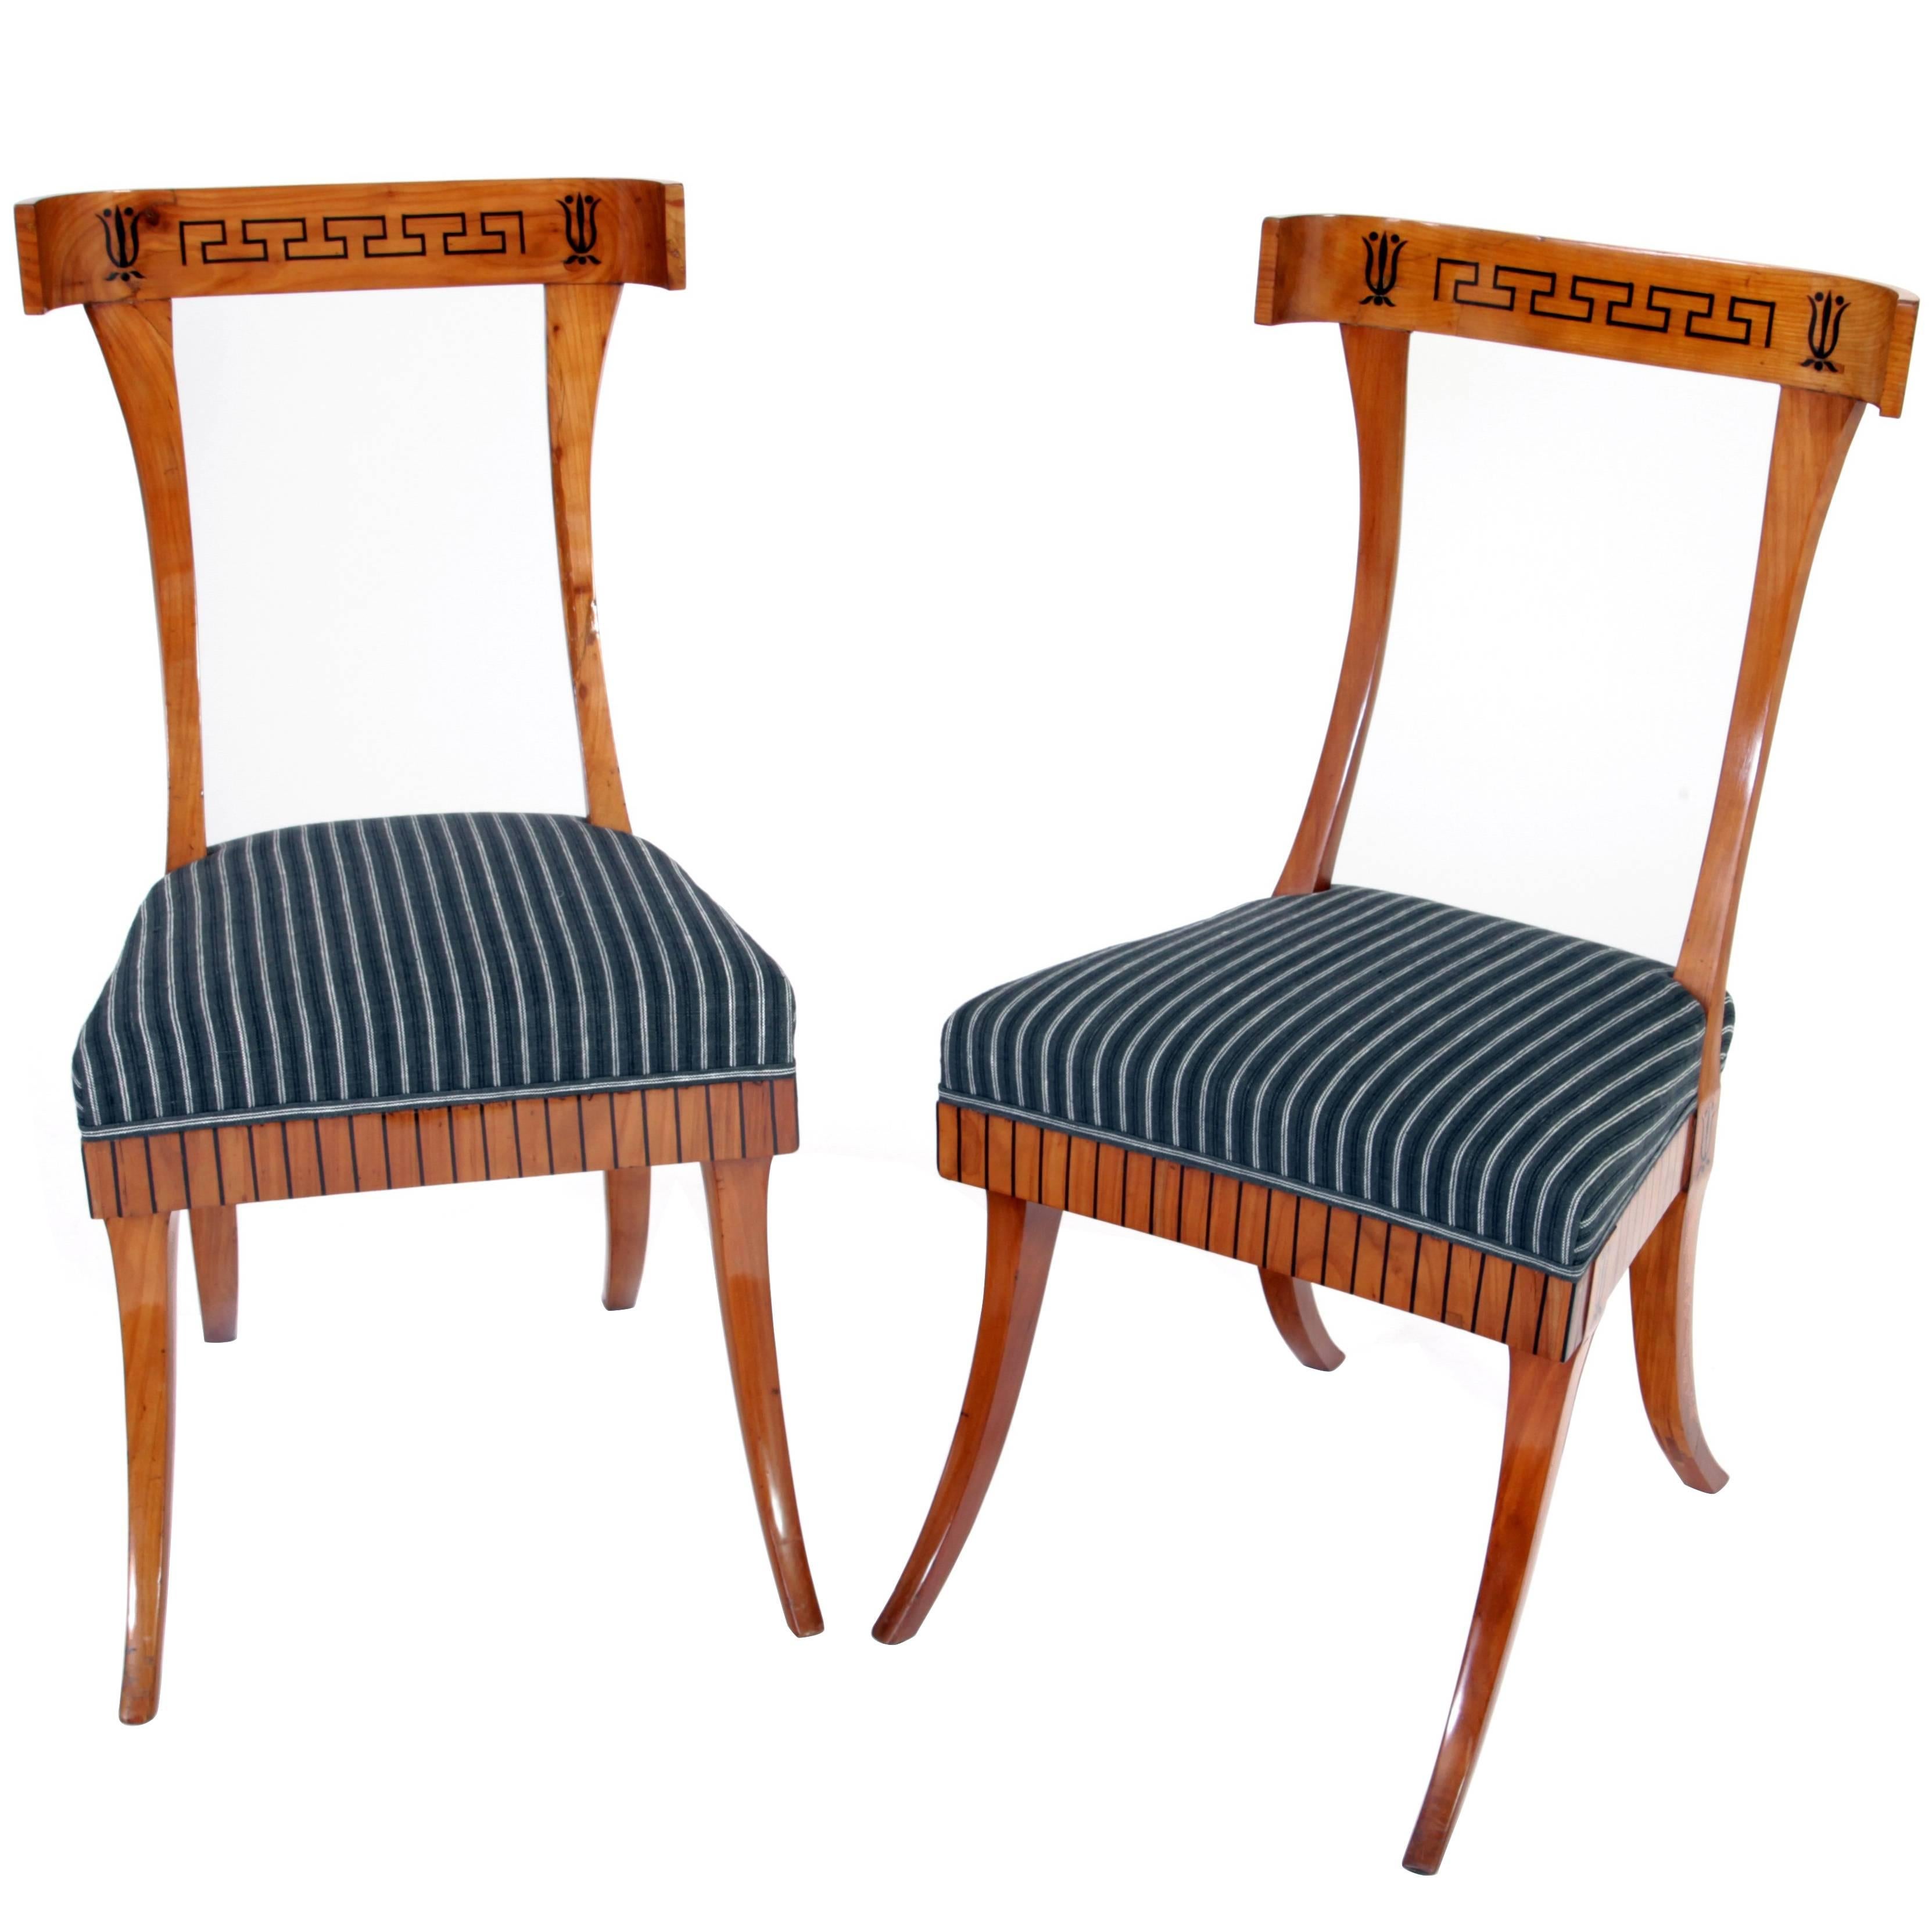 North European Klismos Chairs, 19th Century